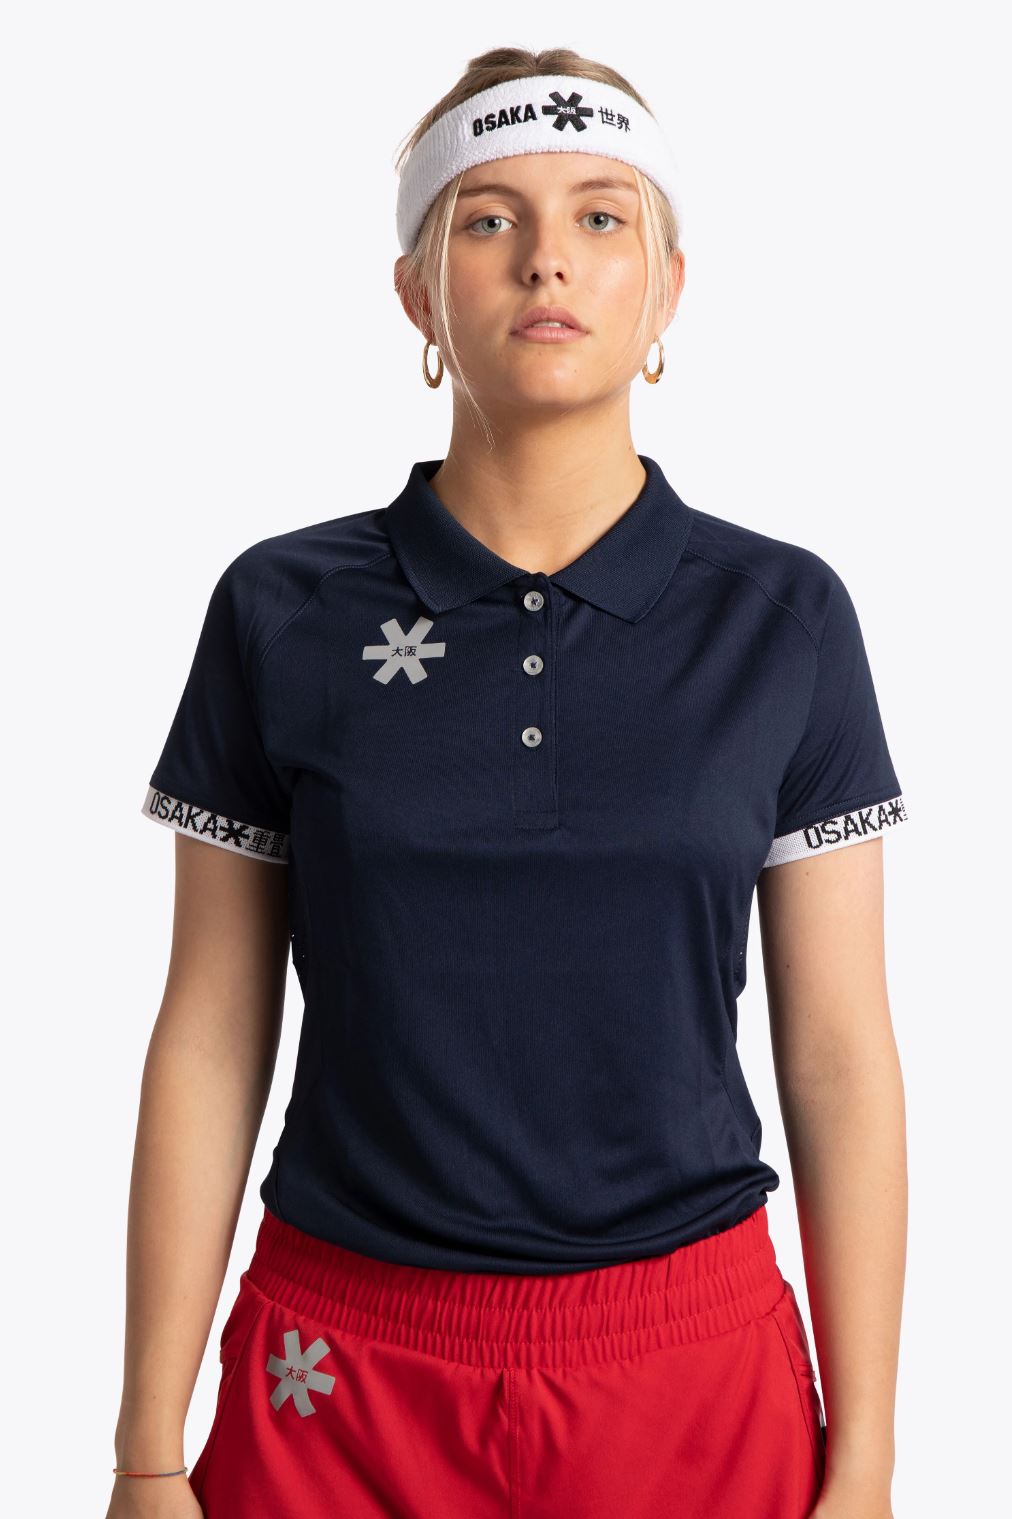 Osaka Women's Polo Jersey (Mørkeblå) - XL